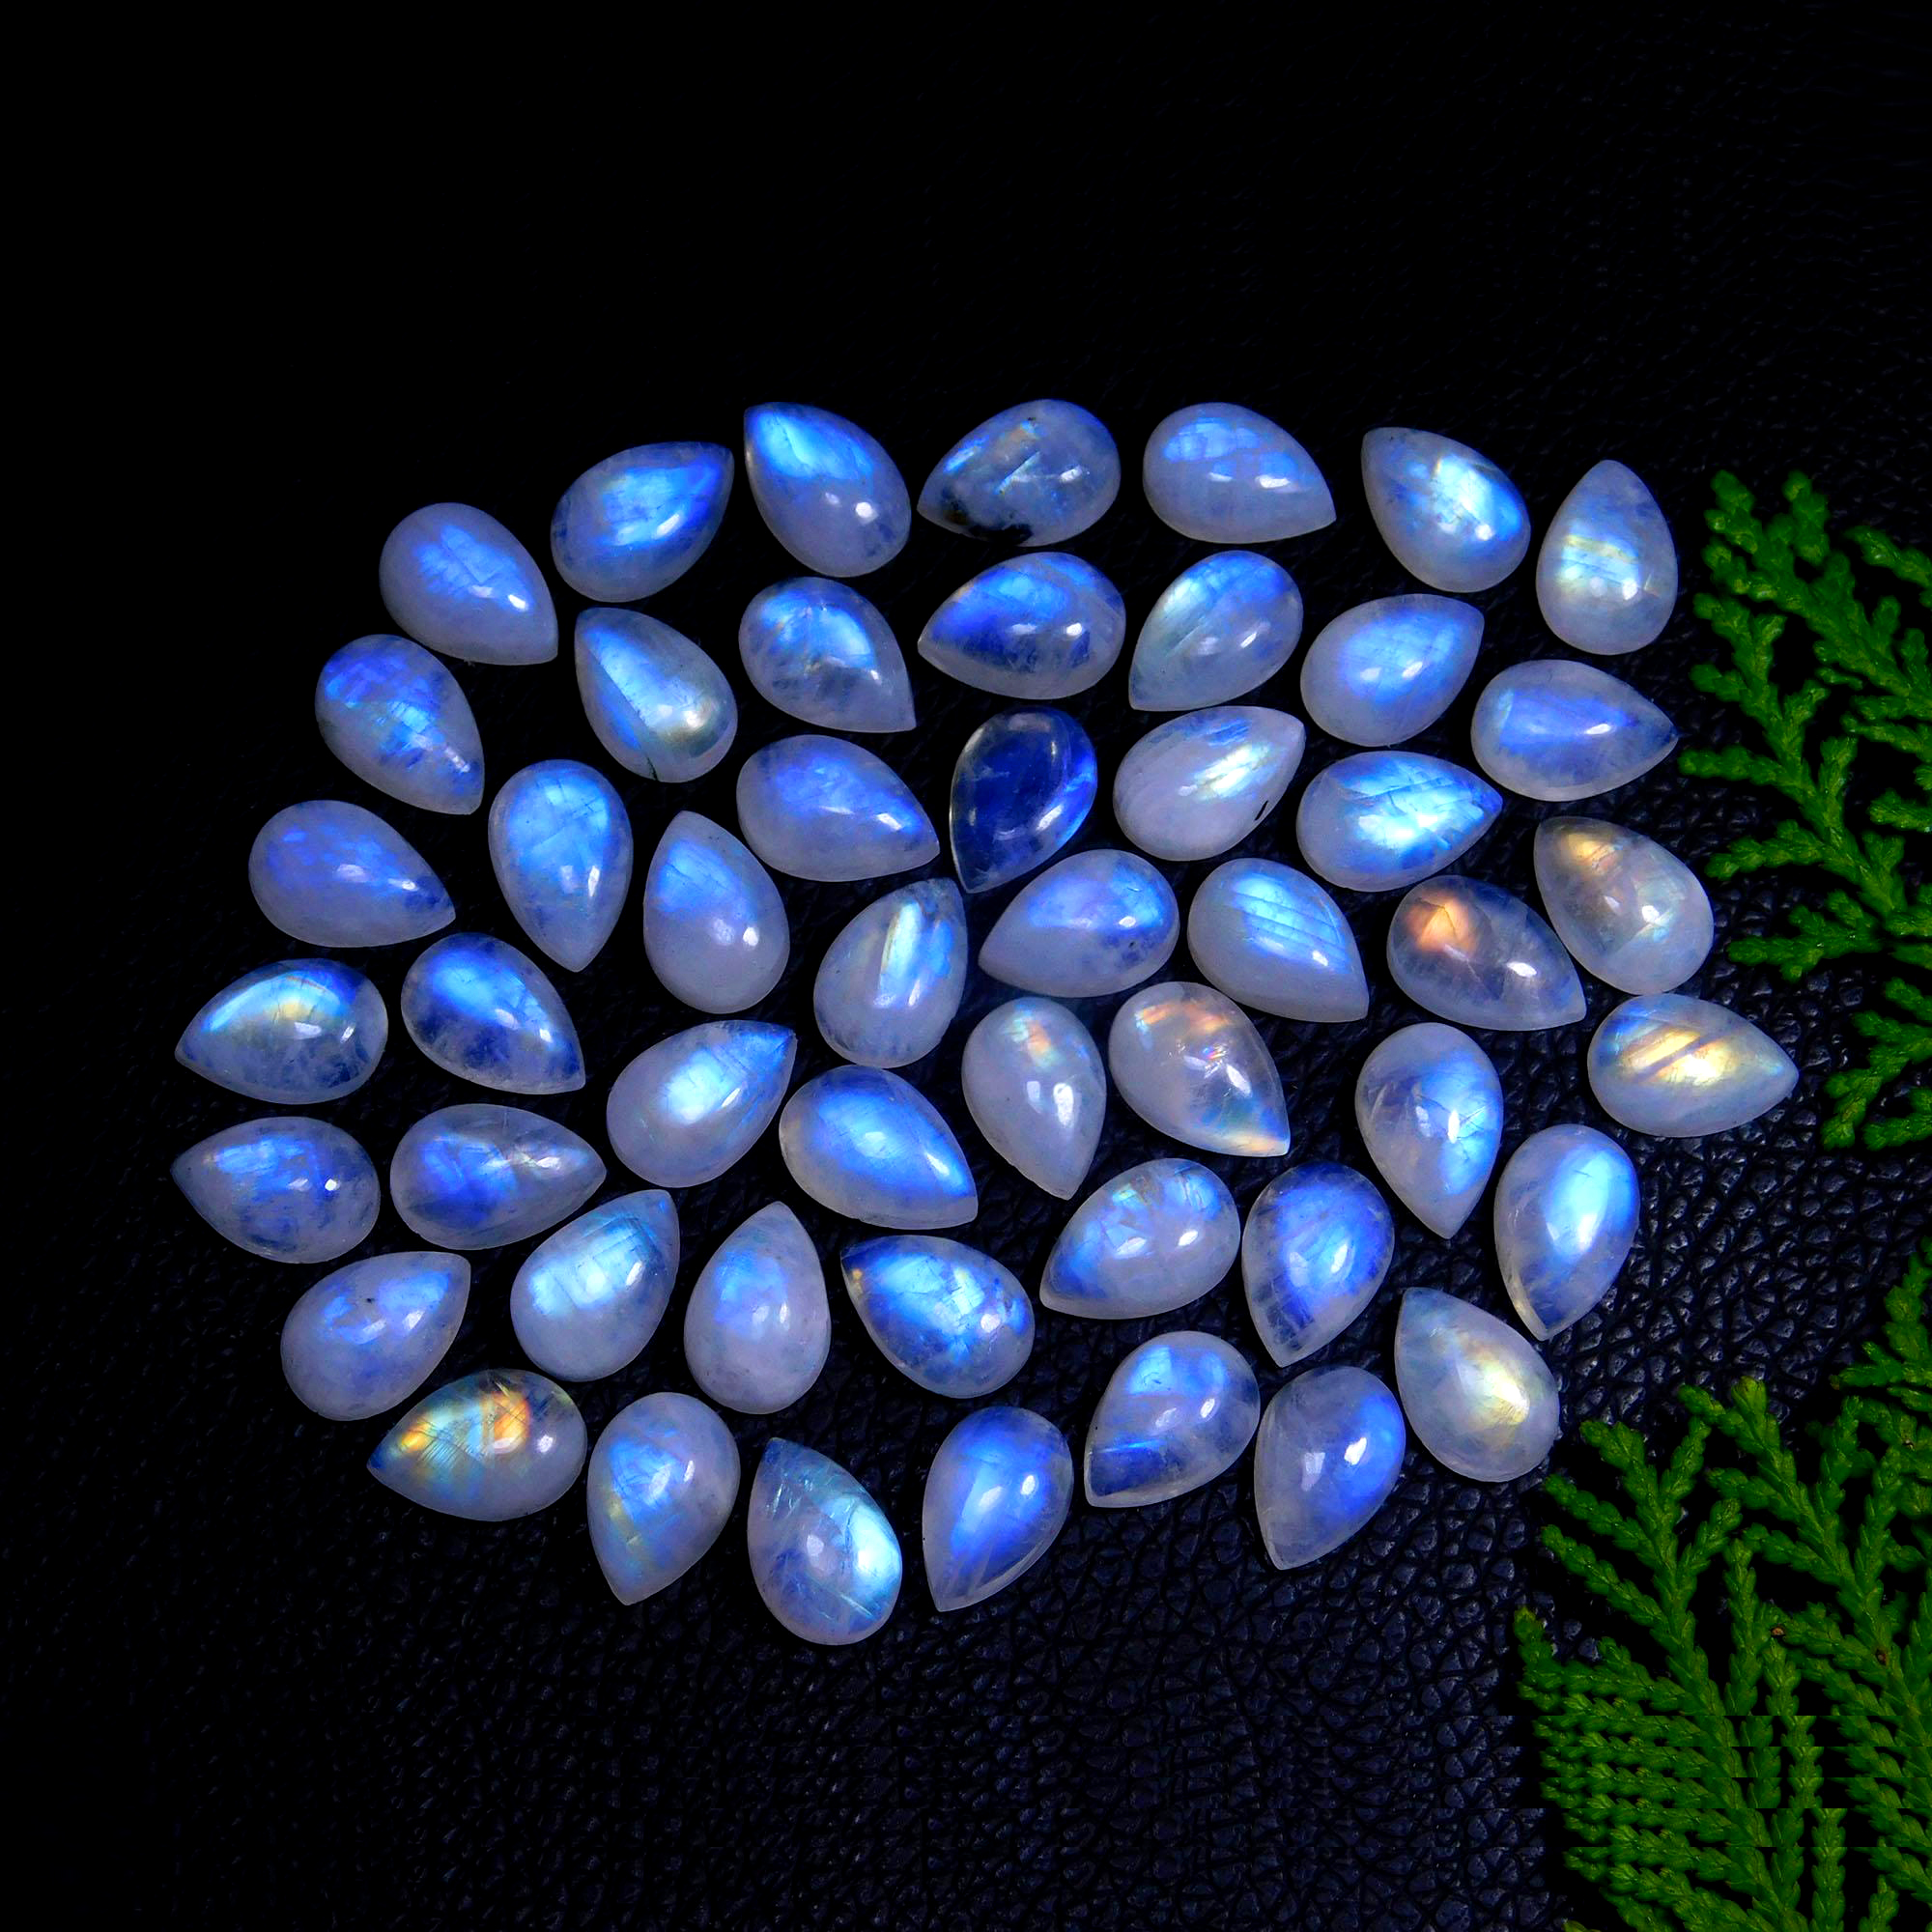 50Pcs 173Cts Natural Rainbow Moonstone Pear Shape Blue Fire Cabochon Lot Semi Precious Loose Gemstone Jewelry Supplies Crystal 12X8mm #9879